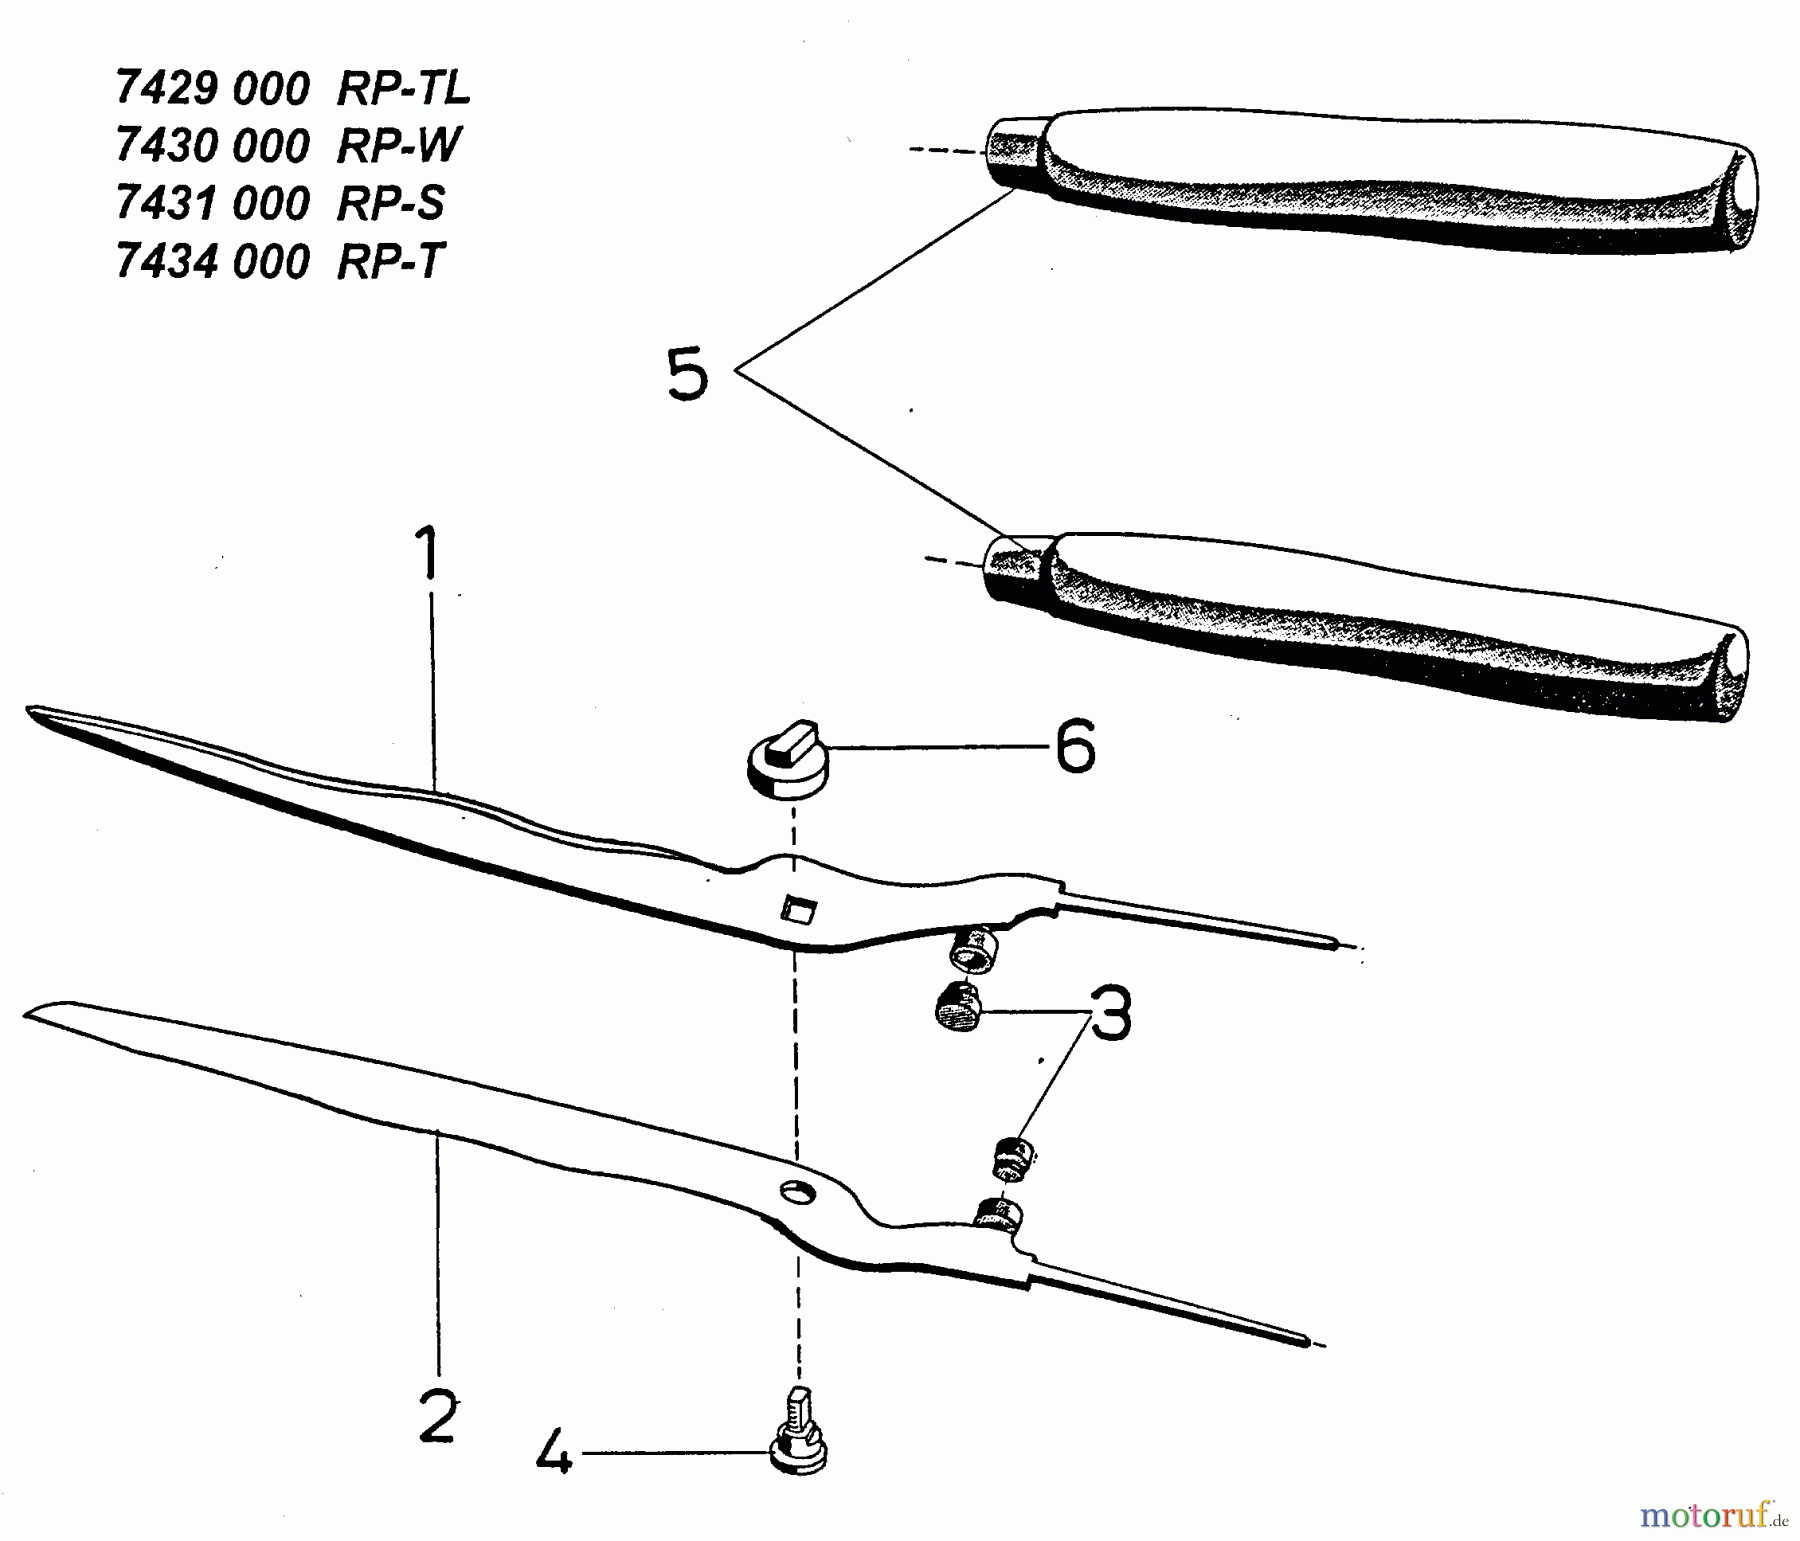  Wolf-Garten Hedge shears manually operated RP-T 7434000  (1998) Basic machine